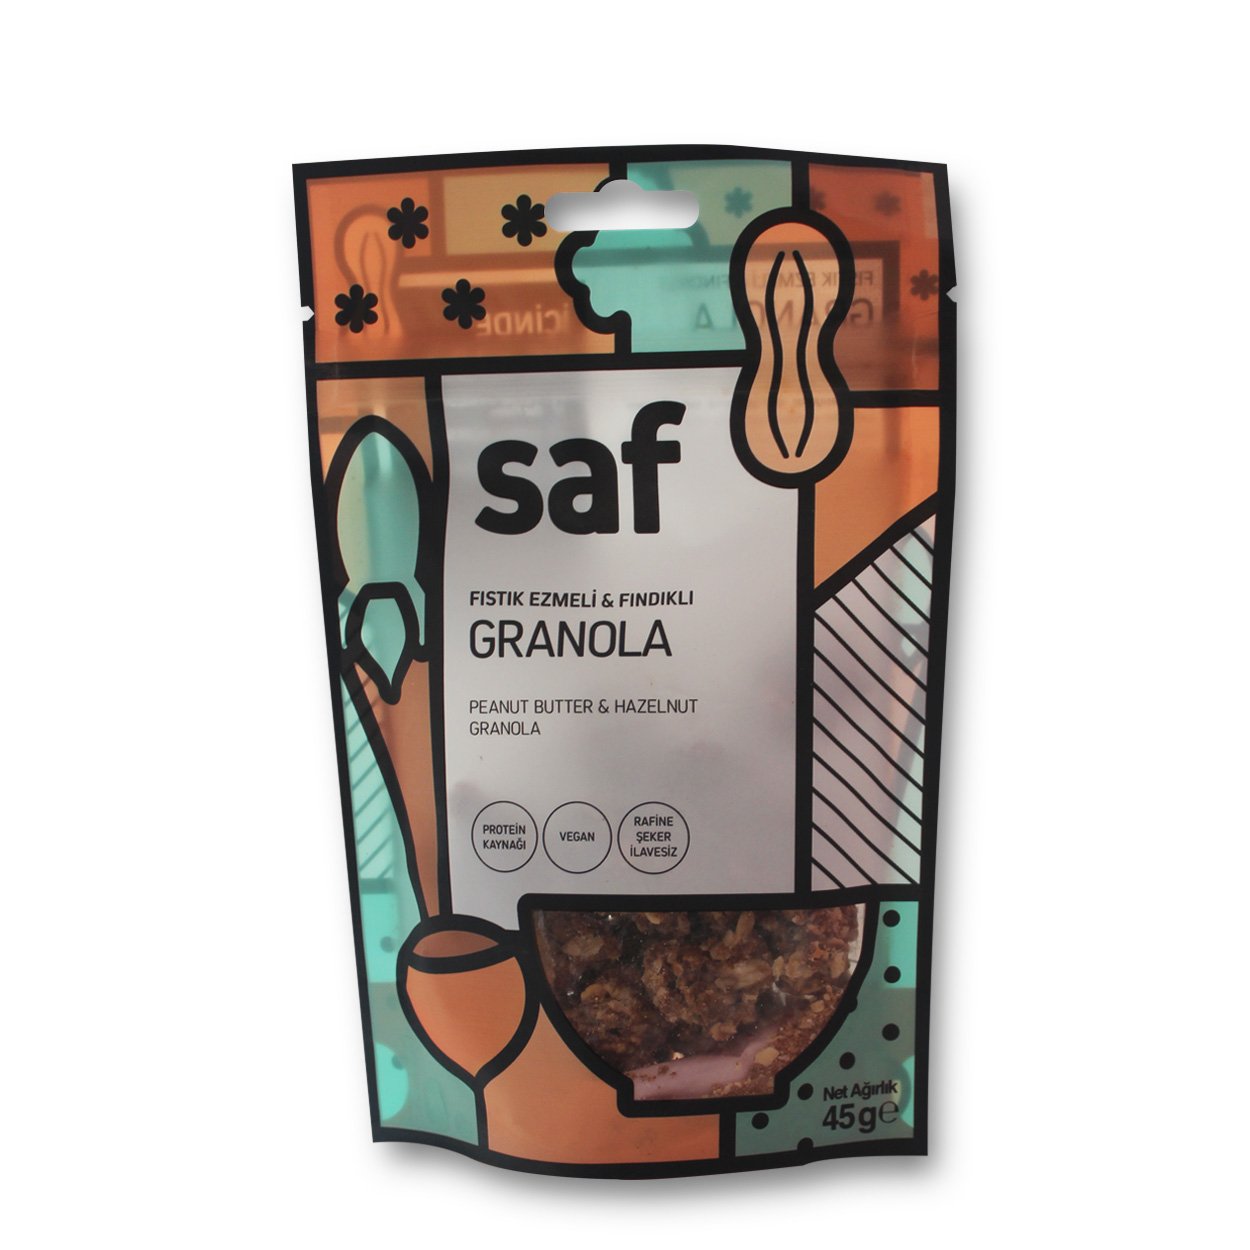 274110-saf-fistik-ezmeli-findikli-granola